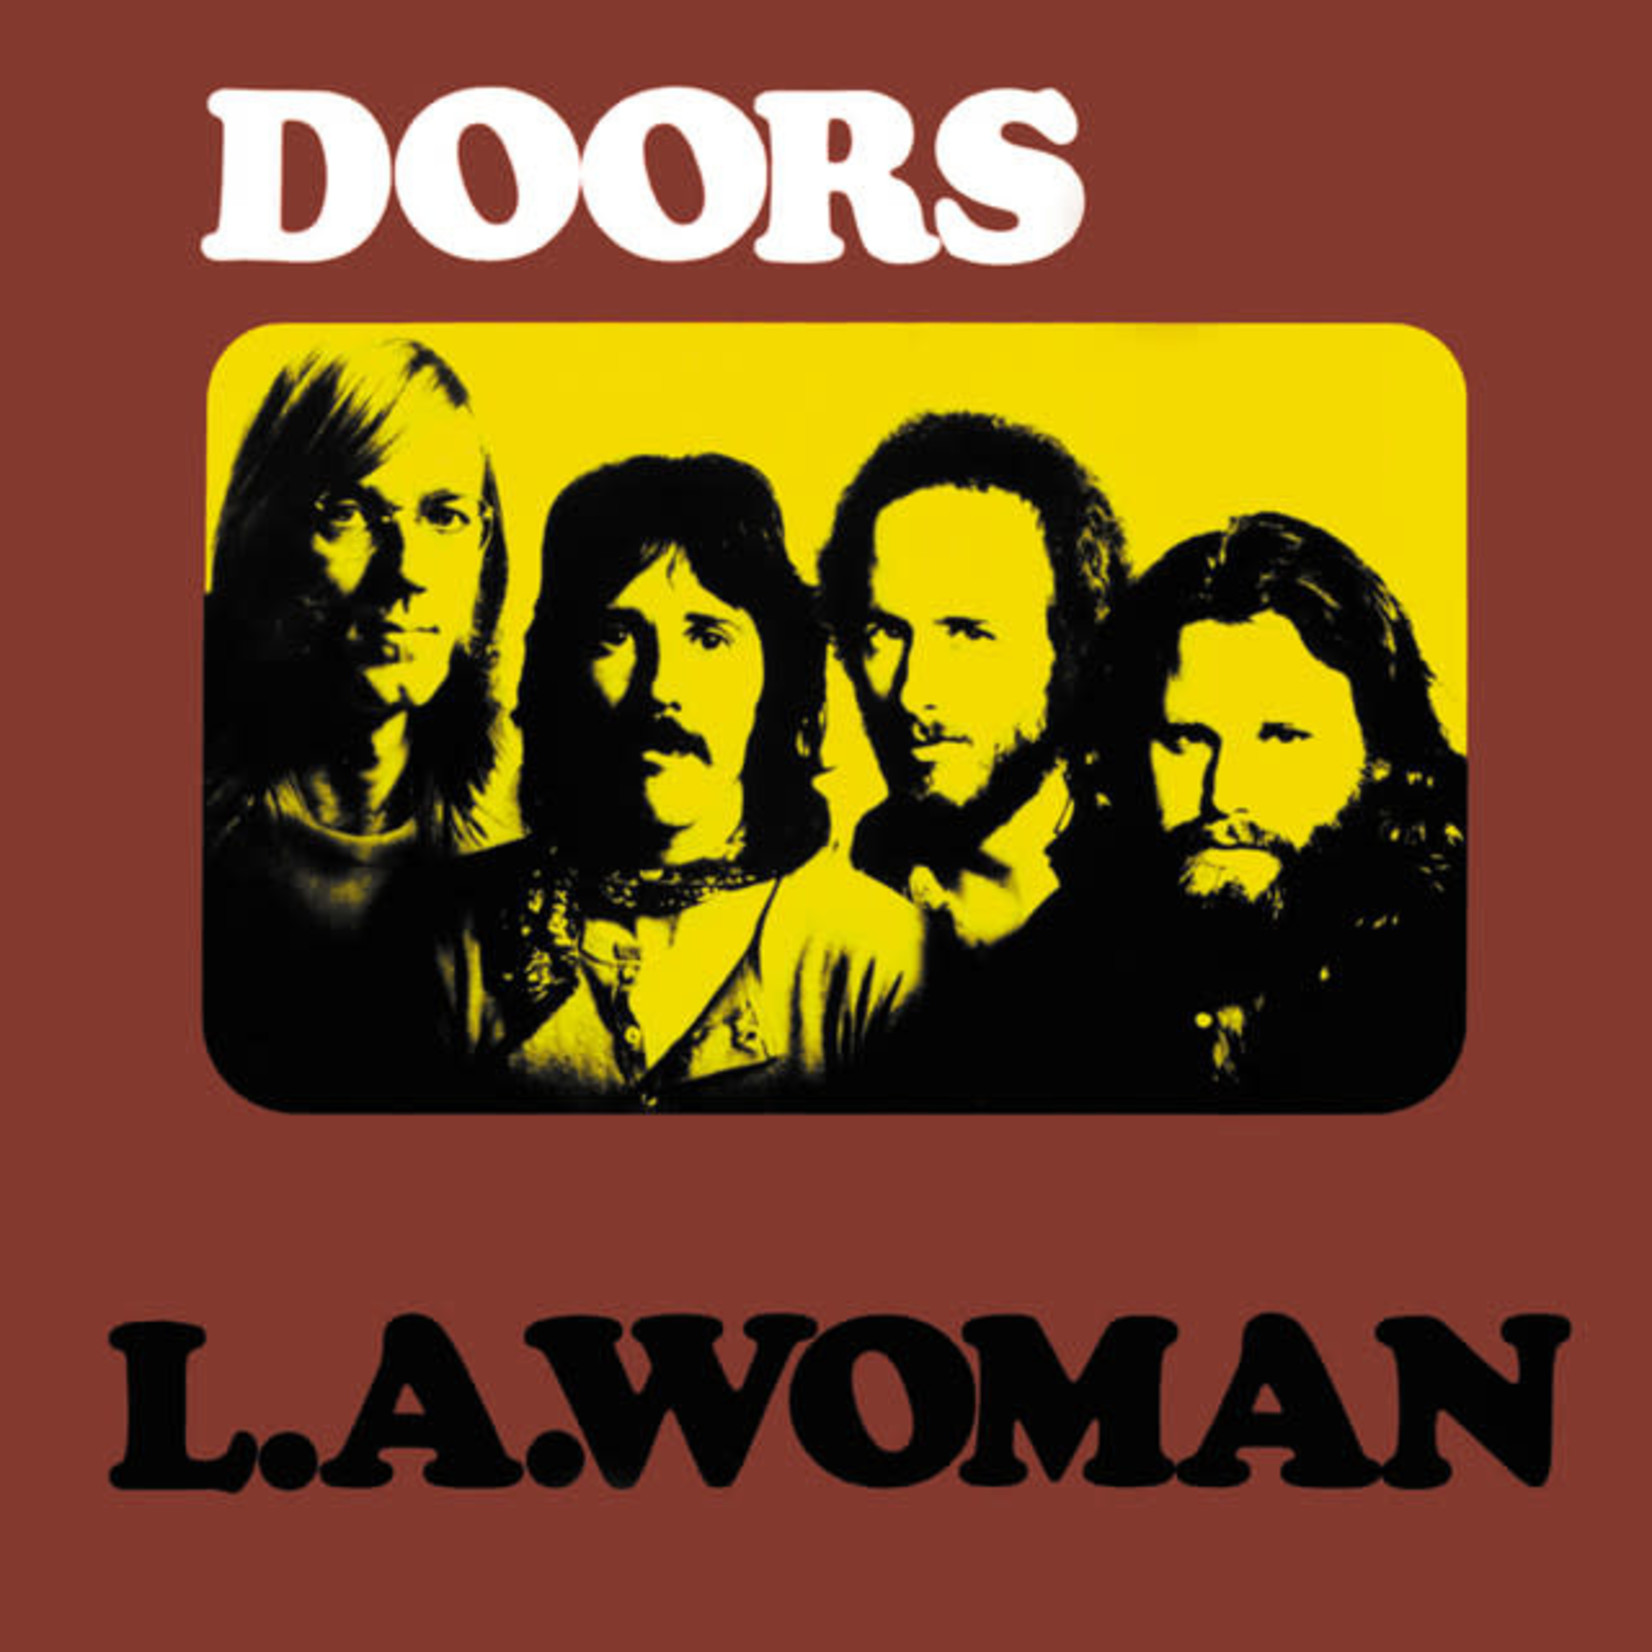 Vinyl The Doors - L.A. Woman  (50th Anniversary)